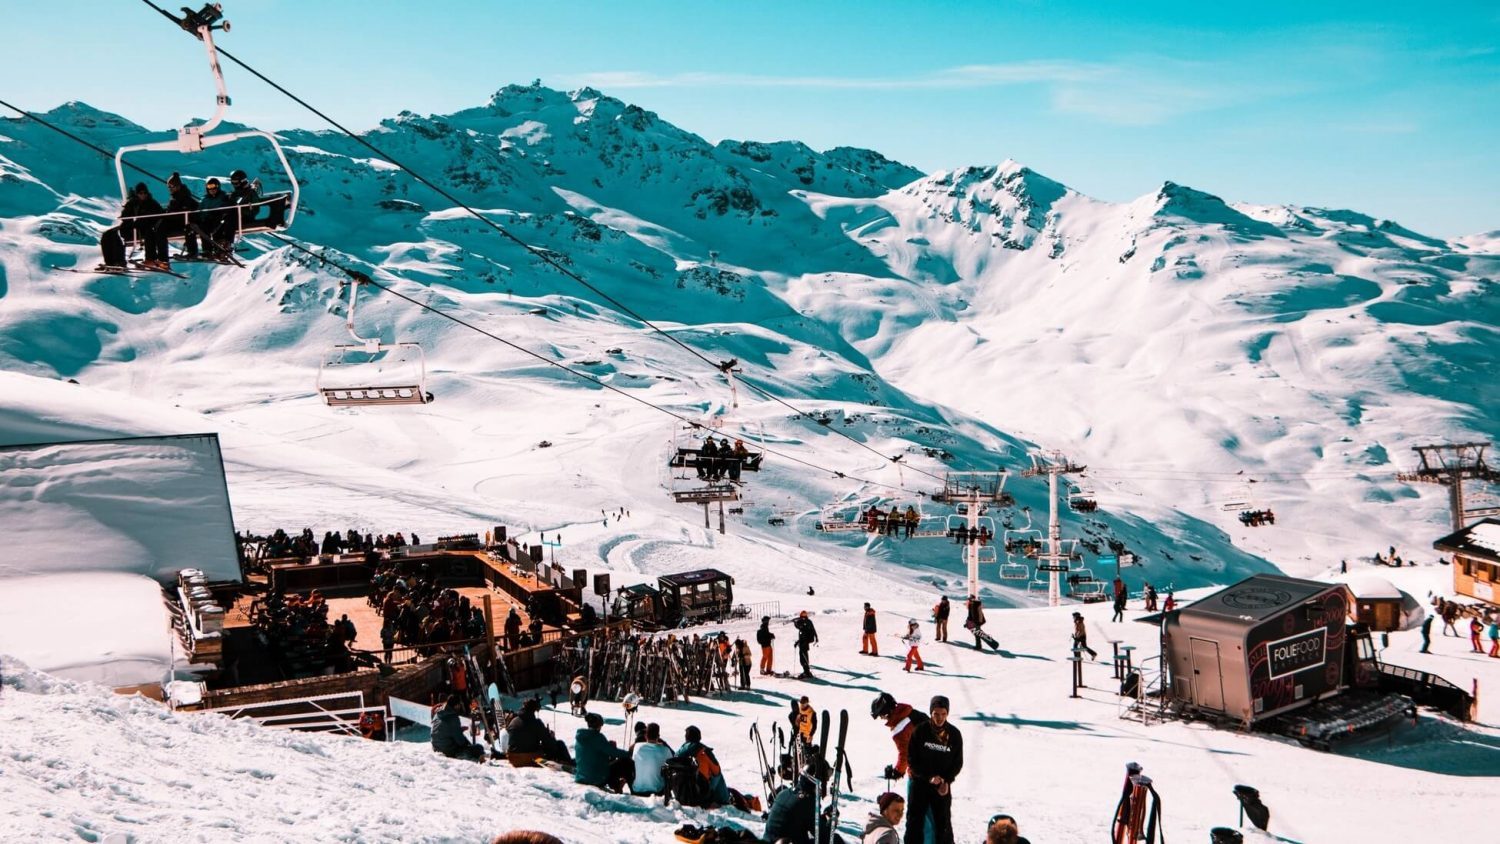 French Holiday Company Ski Beat to Host ‘Vegan Weeks’